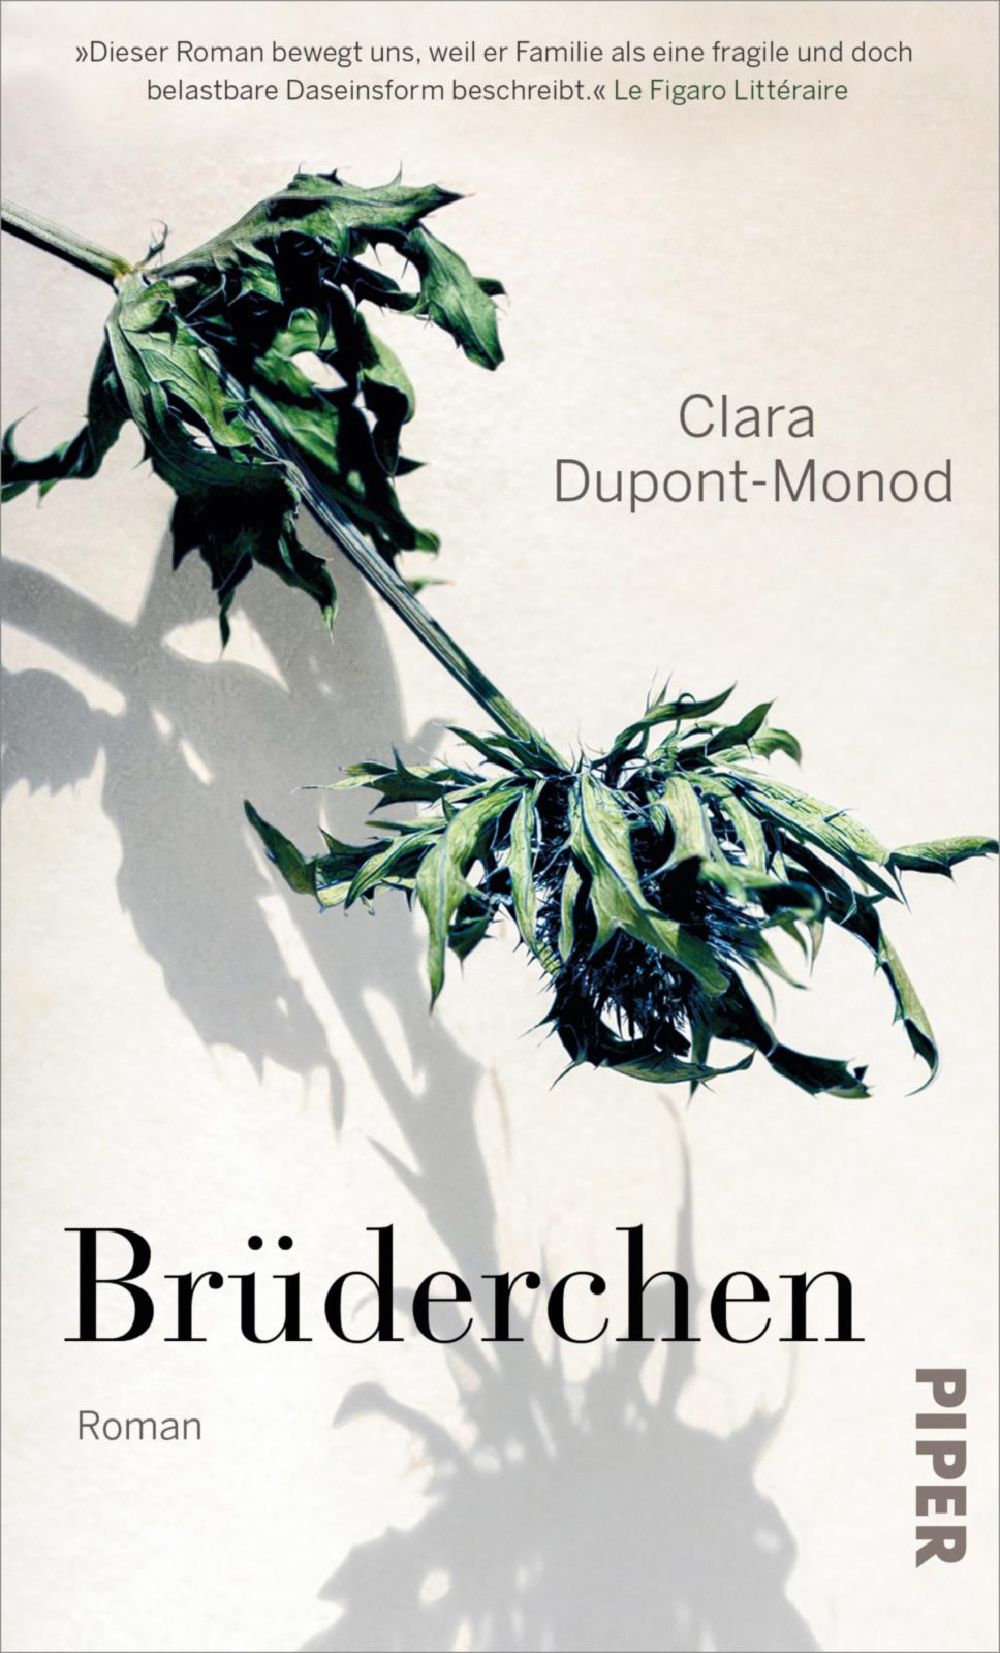 Brüderchen - Clara Dupont-Monod